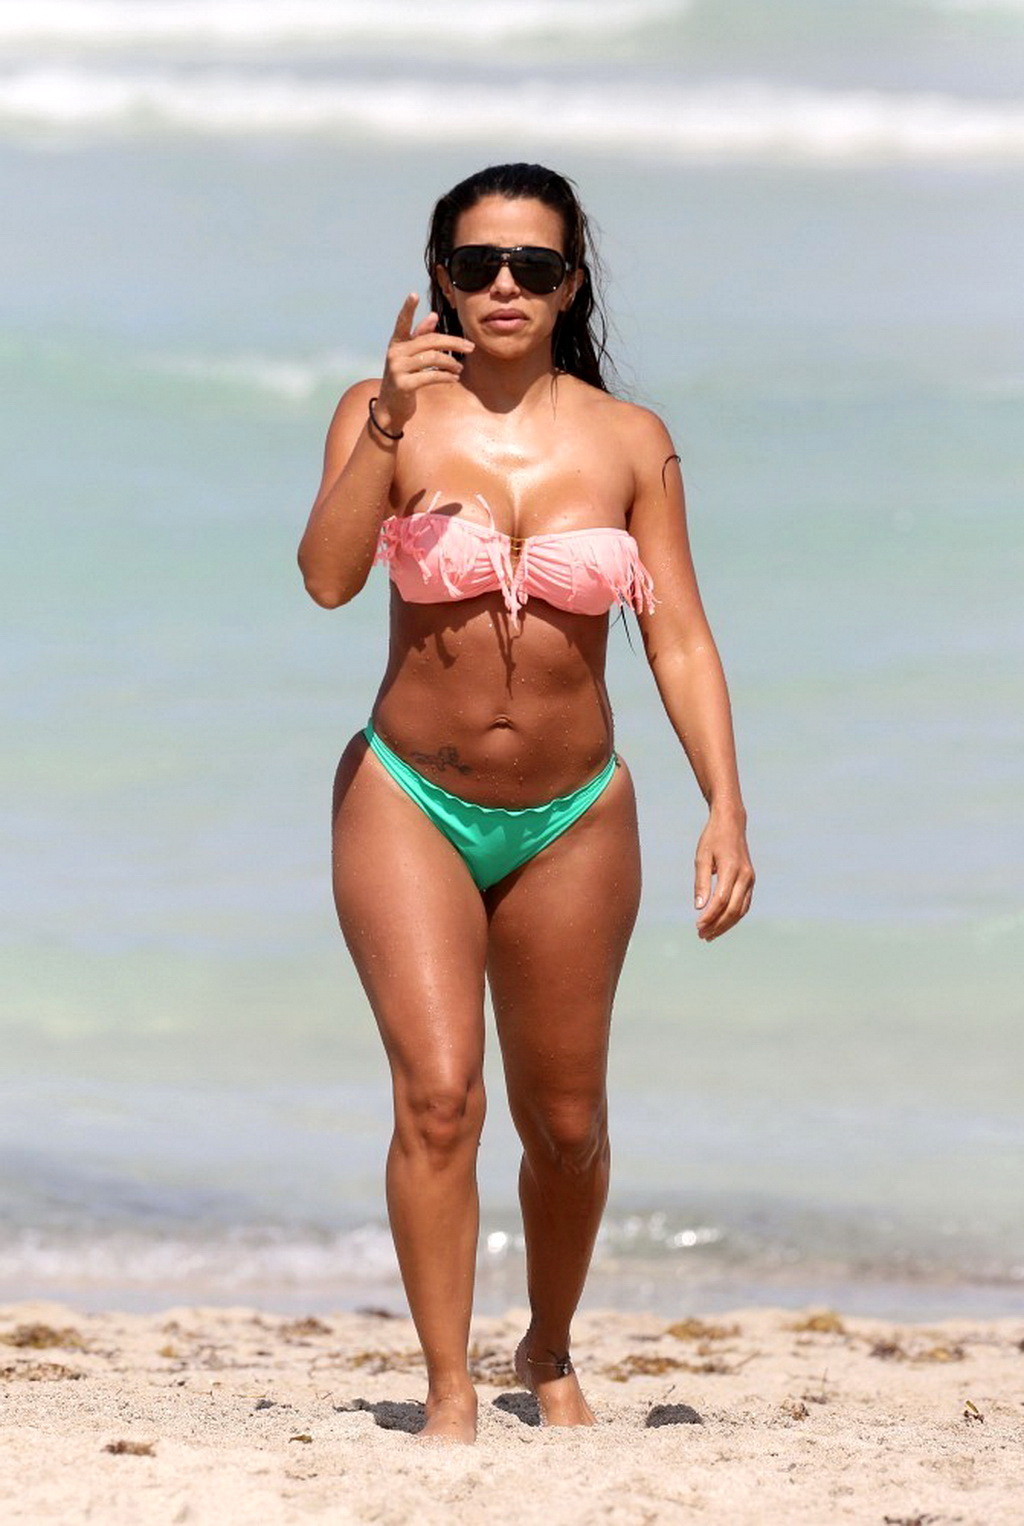 Vida guerra zeigt ihren kurvigen Bikini-Body am Strand
 #75233919